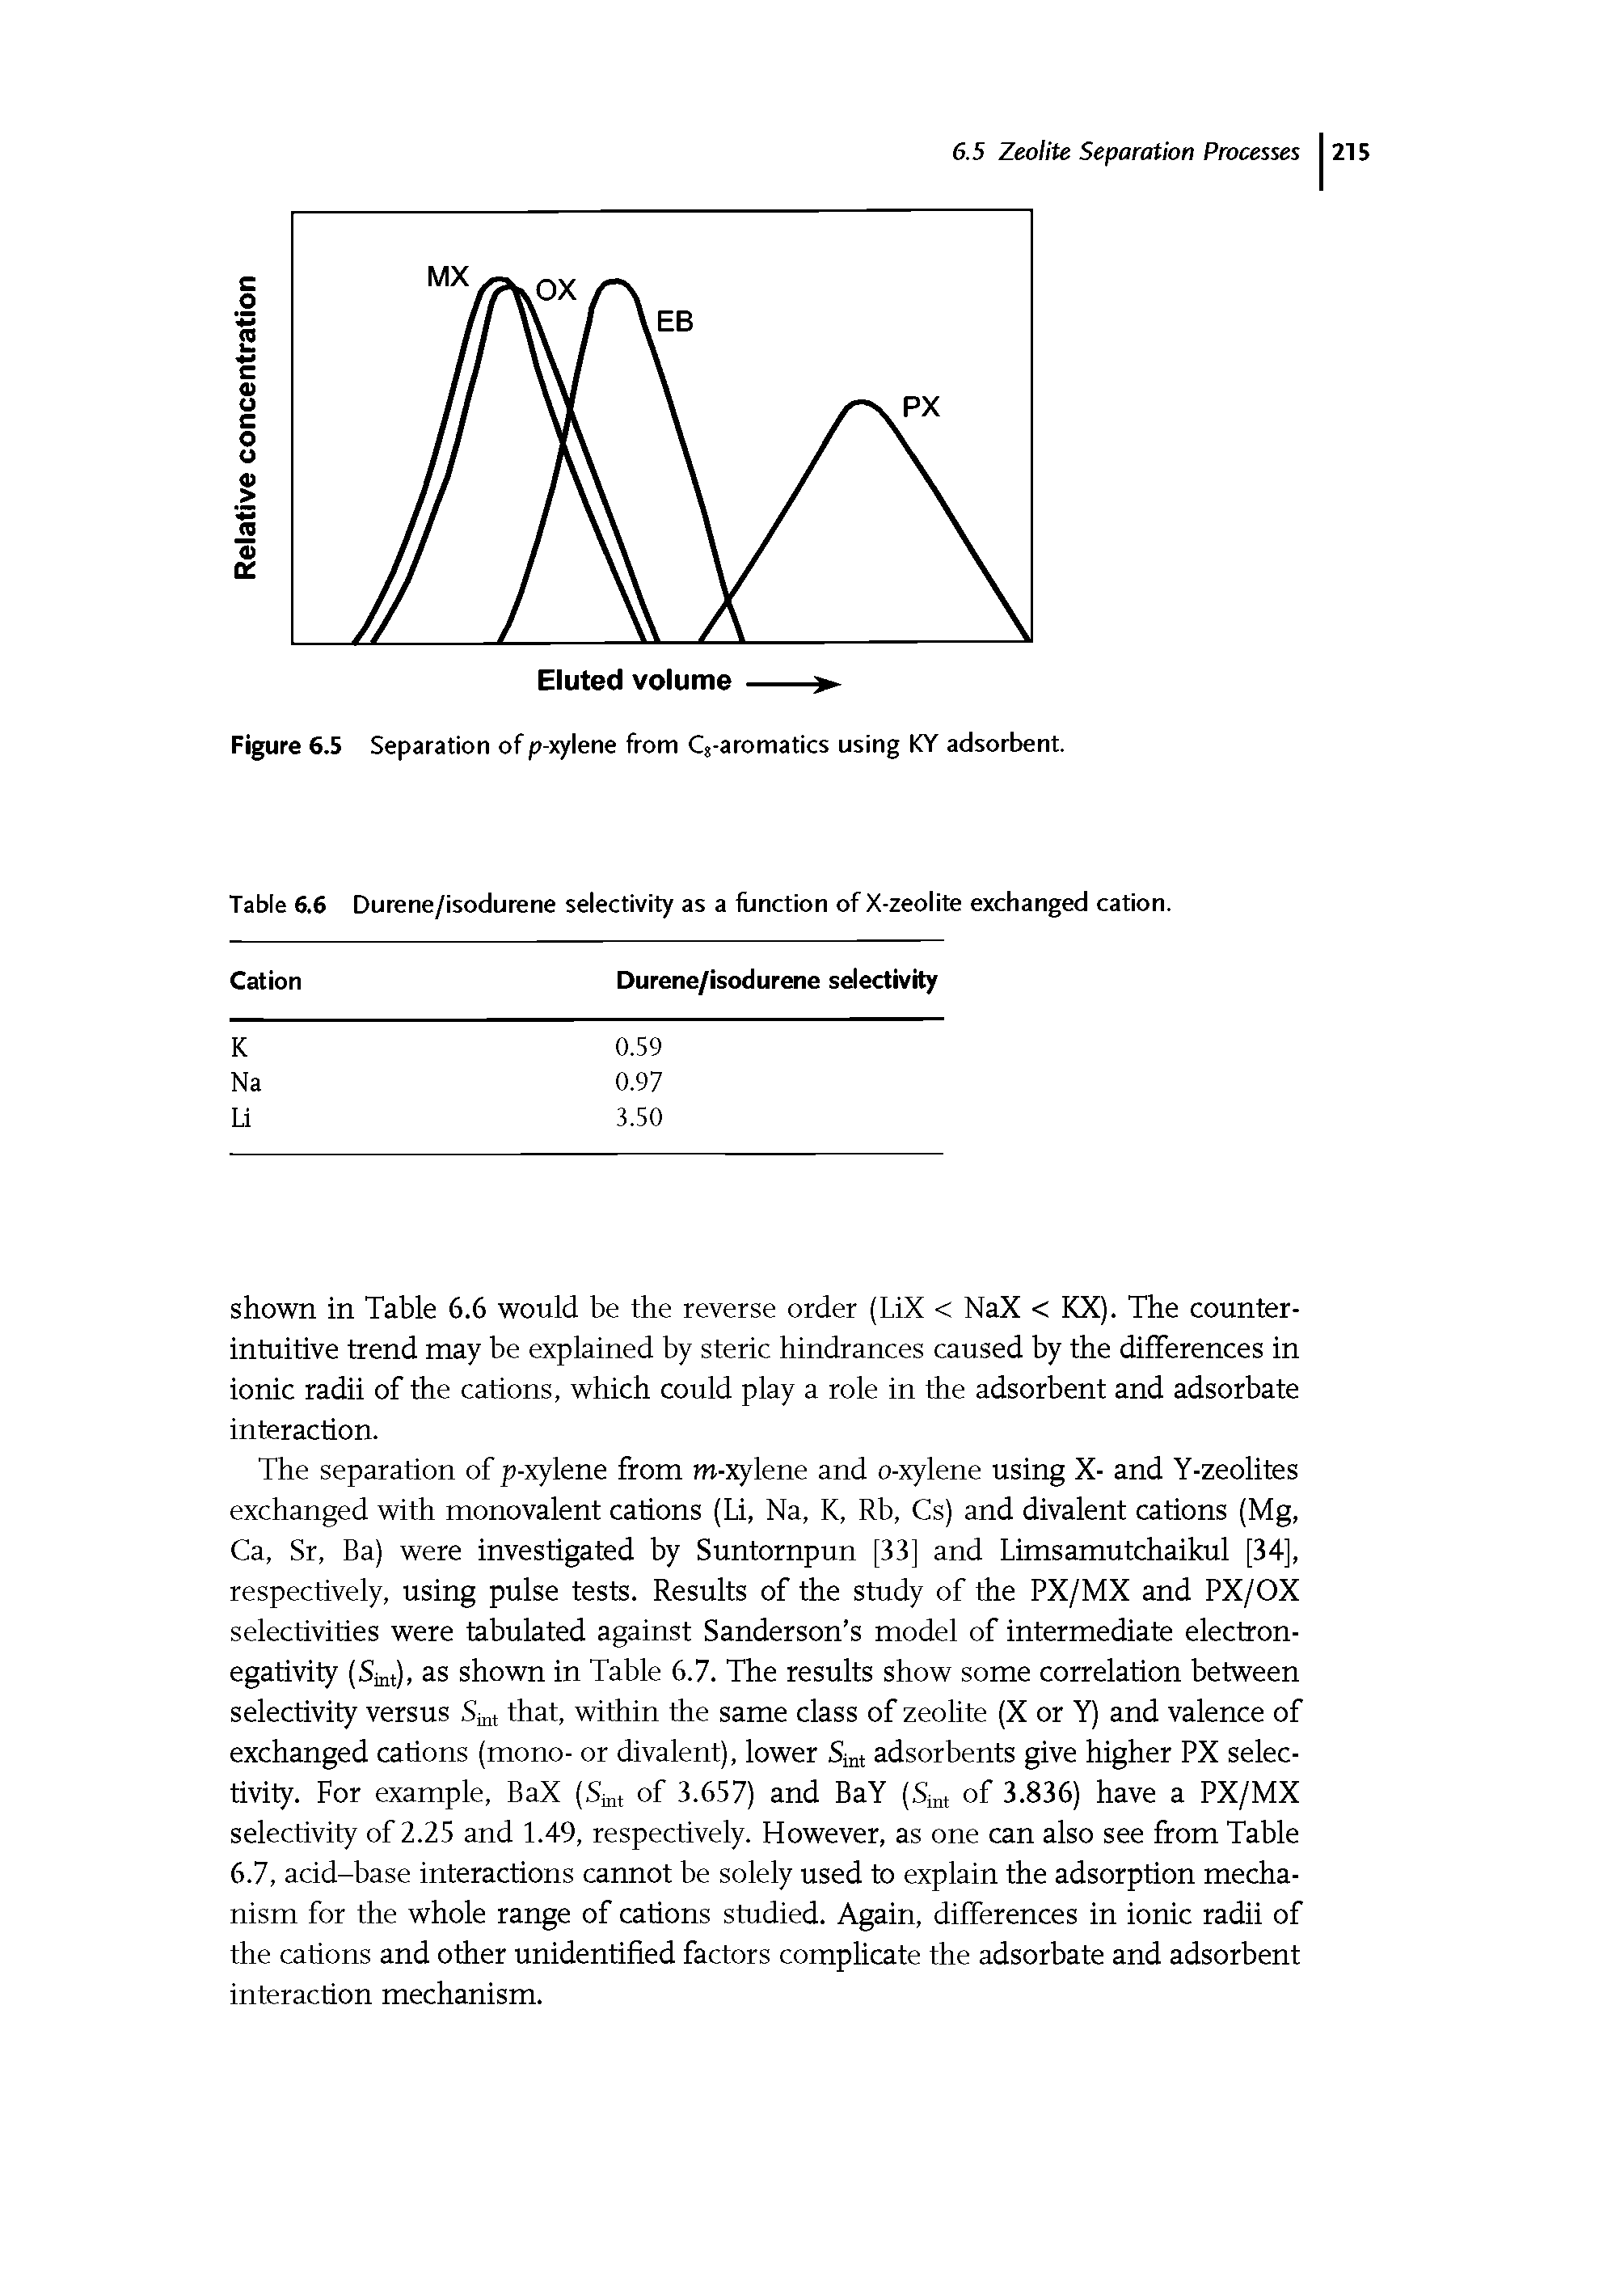 Table 6.6 Durene/isodurene selectivity as a function of X-zeolite exchanged cation.